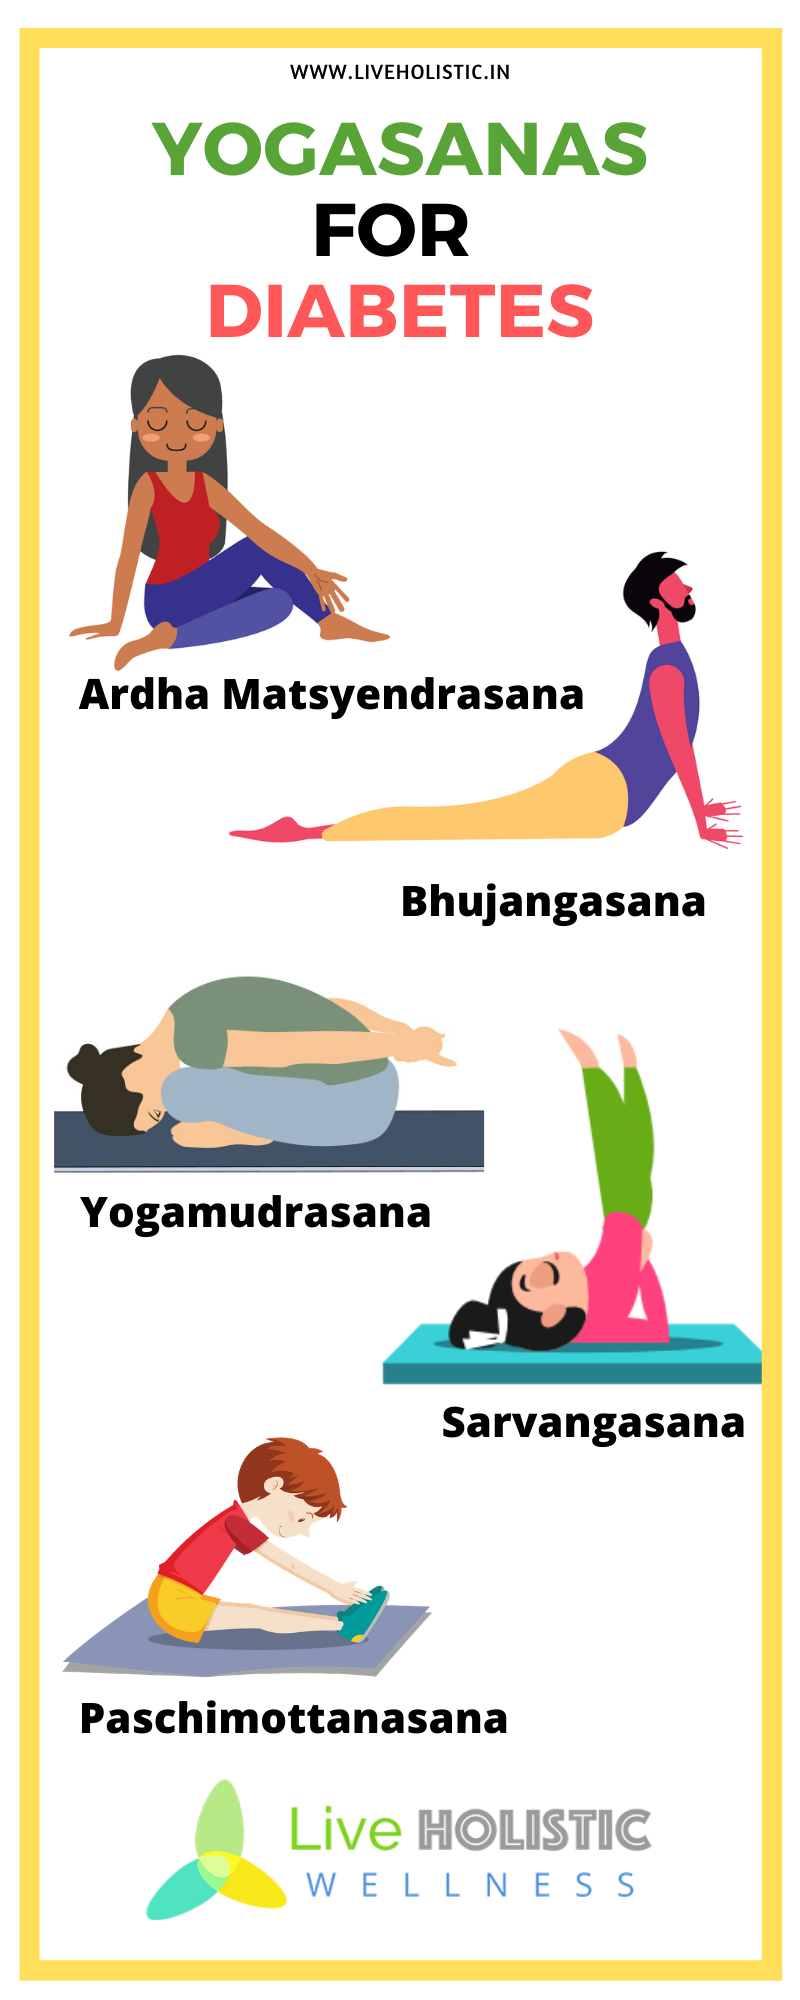 Know your yoga pose — Balasana